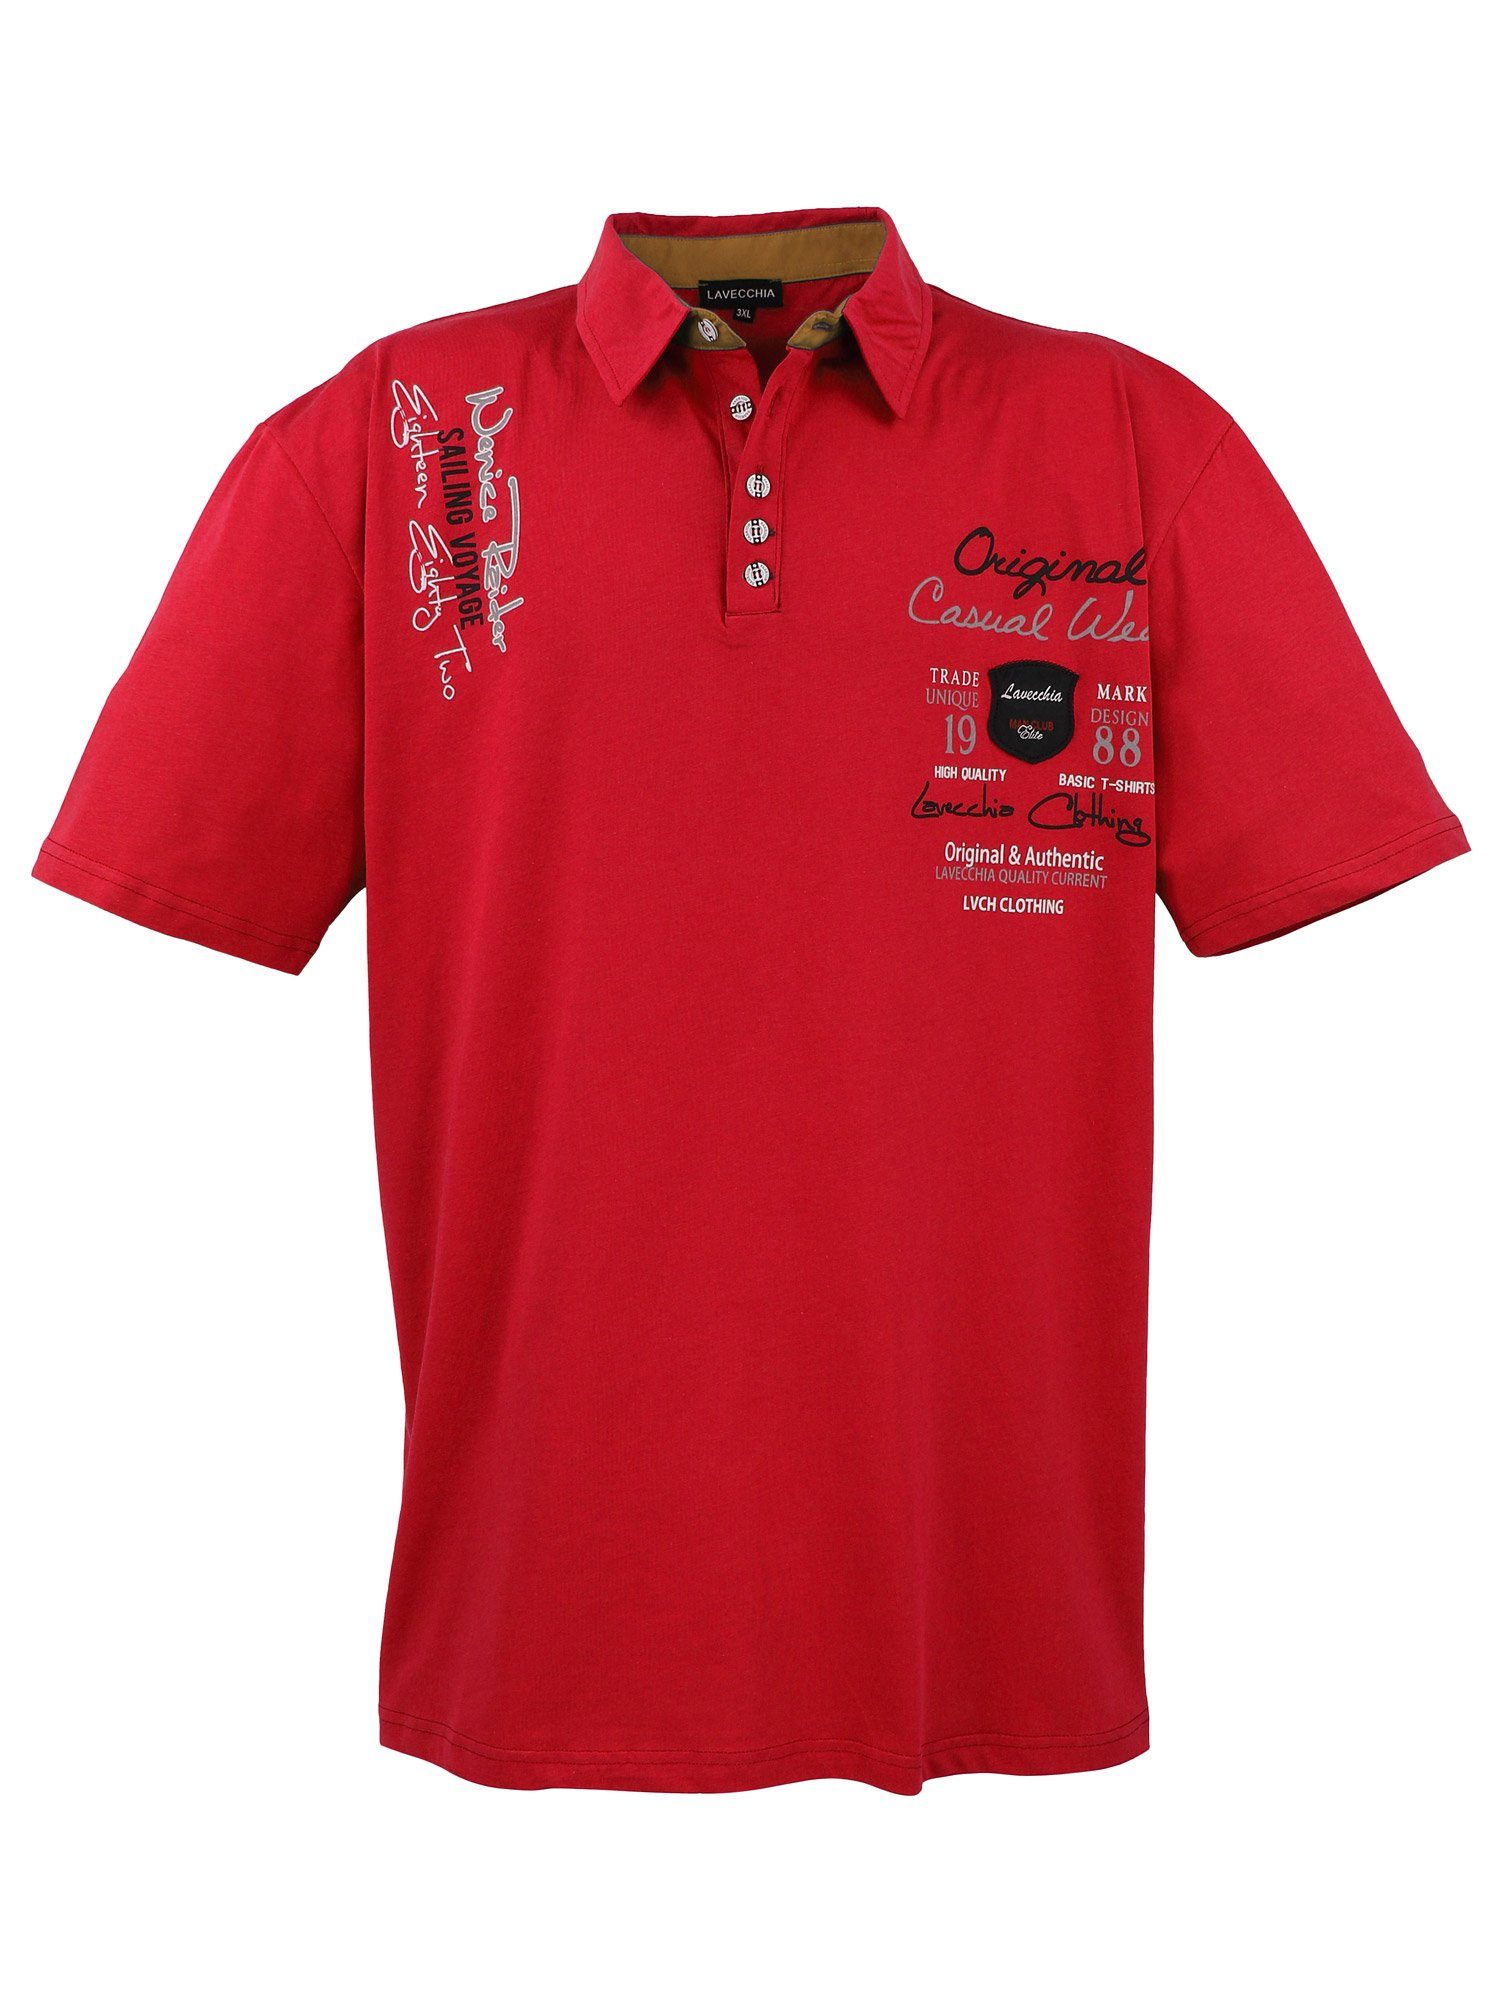 Polo LV-610 Herren Lavecchia Übergrößen Poloshirt rot Herren Polo Shirt Shirt